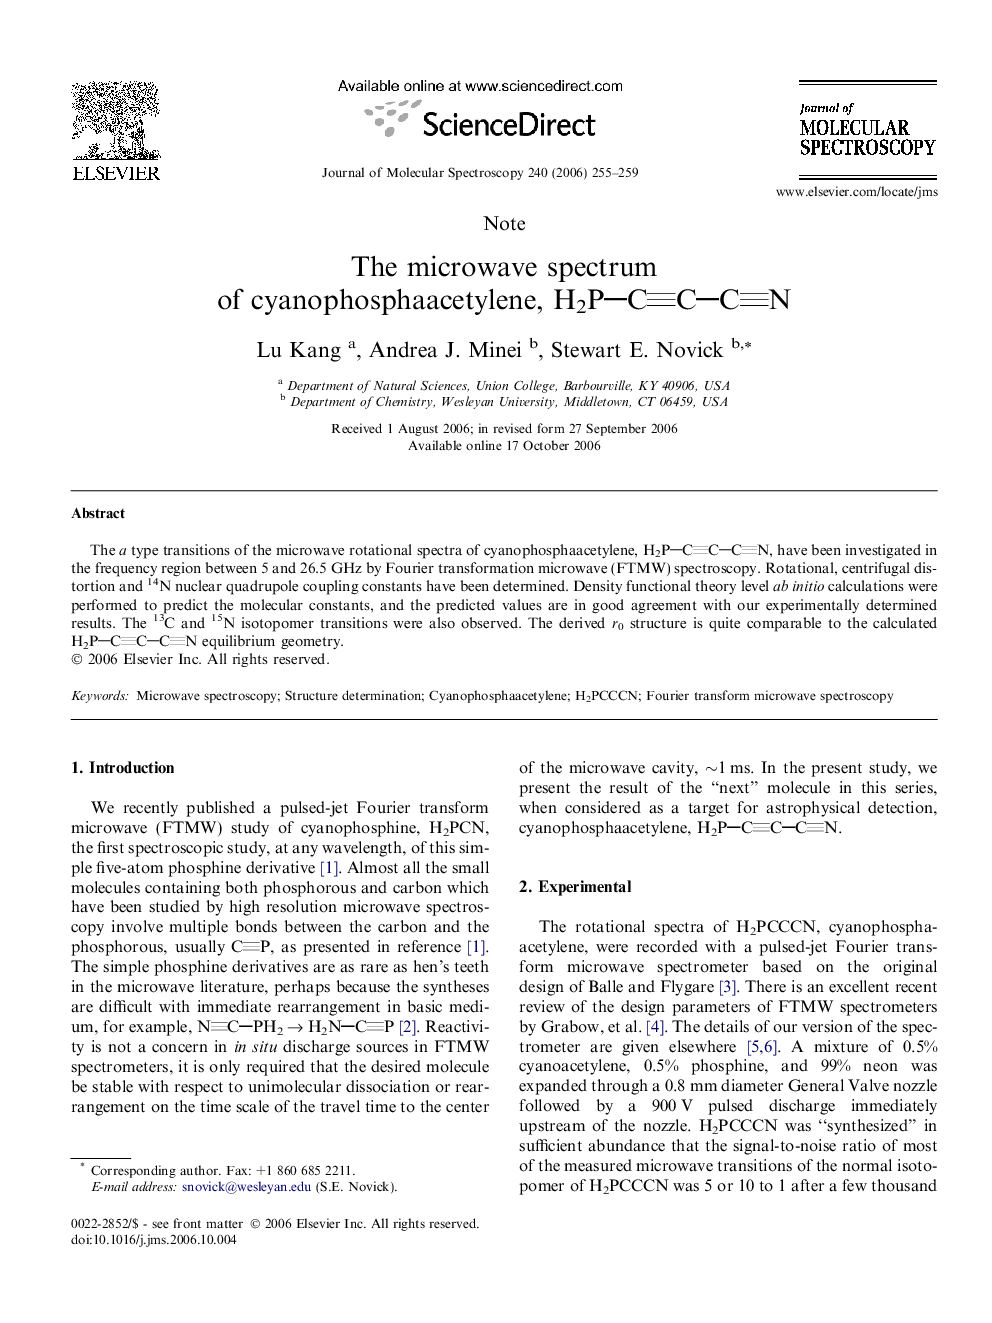 The microwave spectrum of cyanophosphaacetylene, H2PCCCN